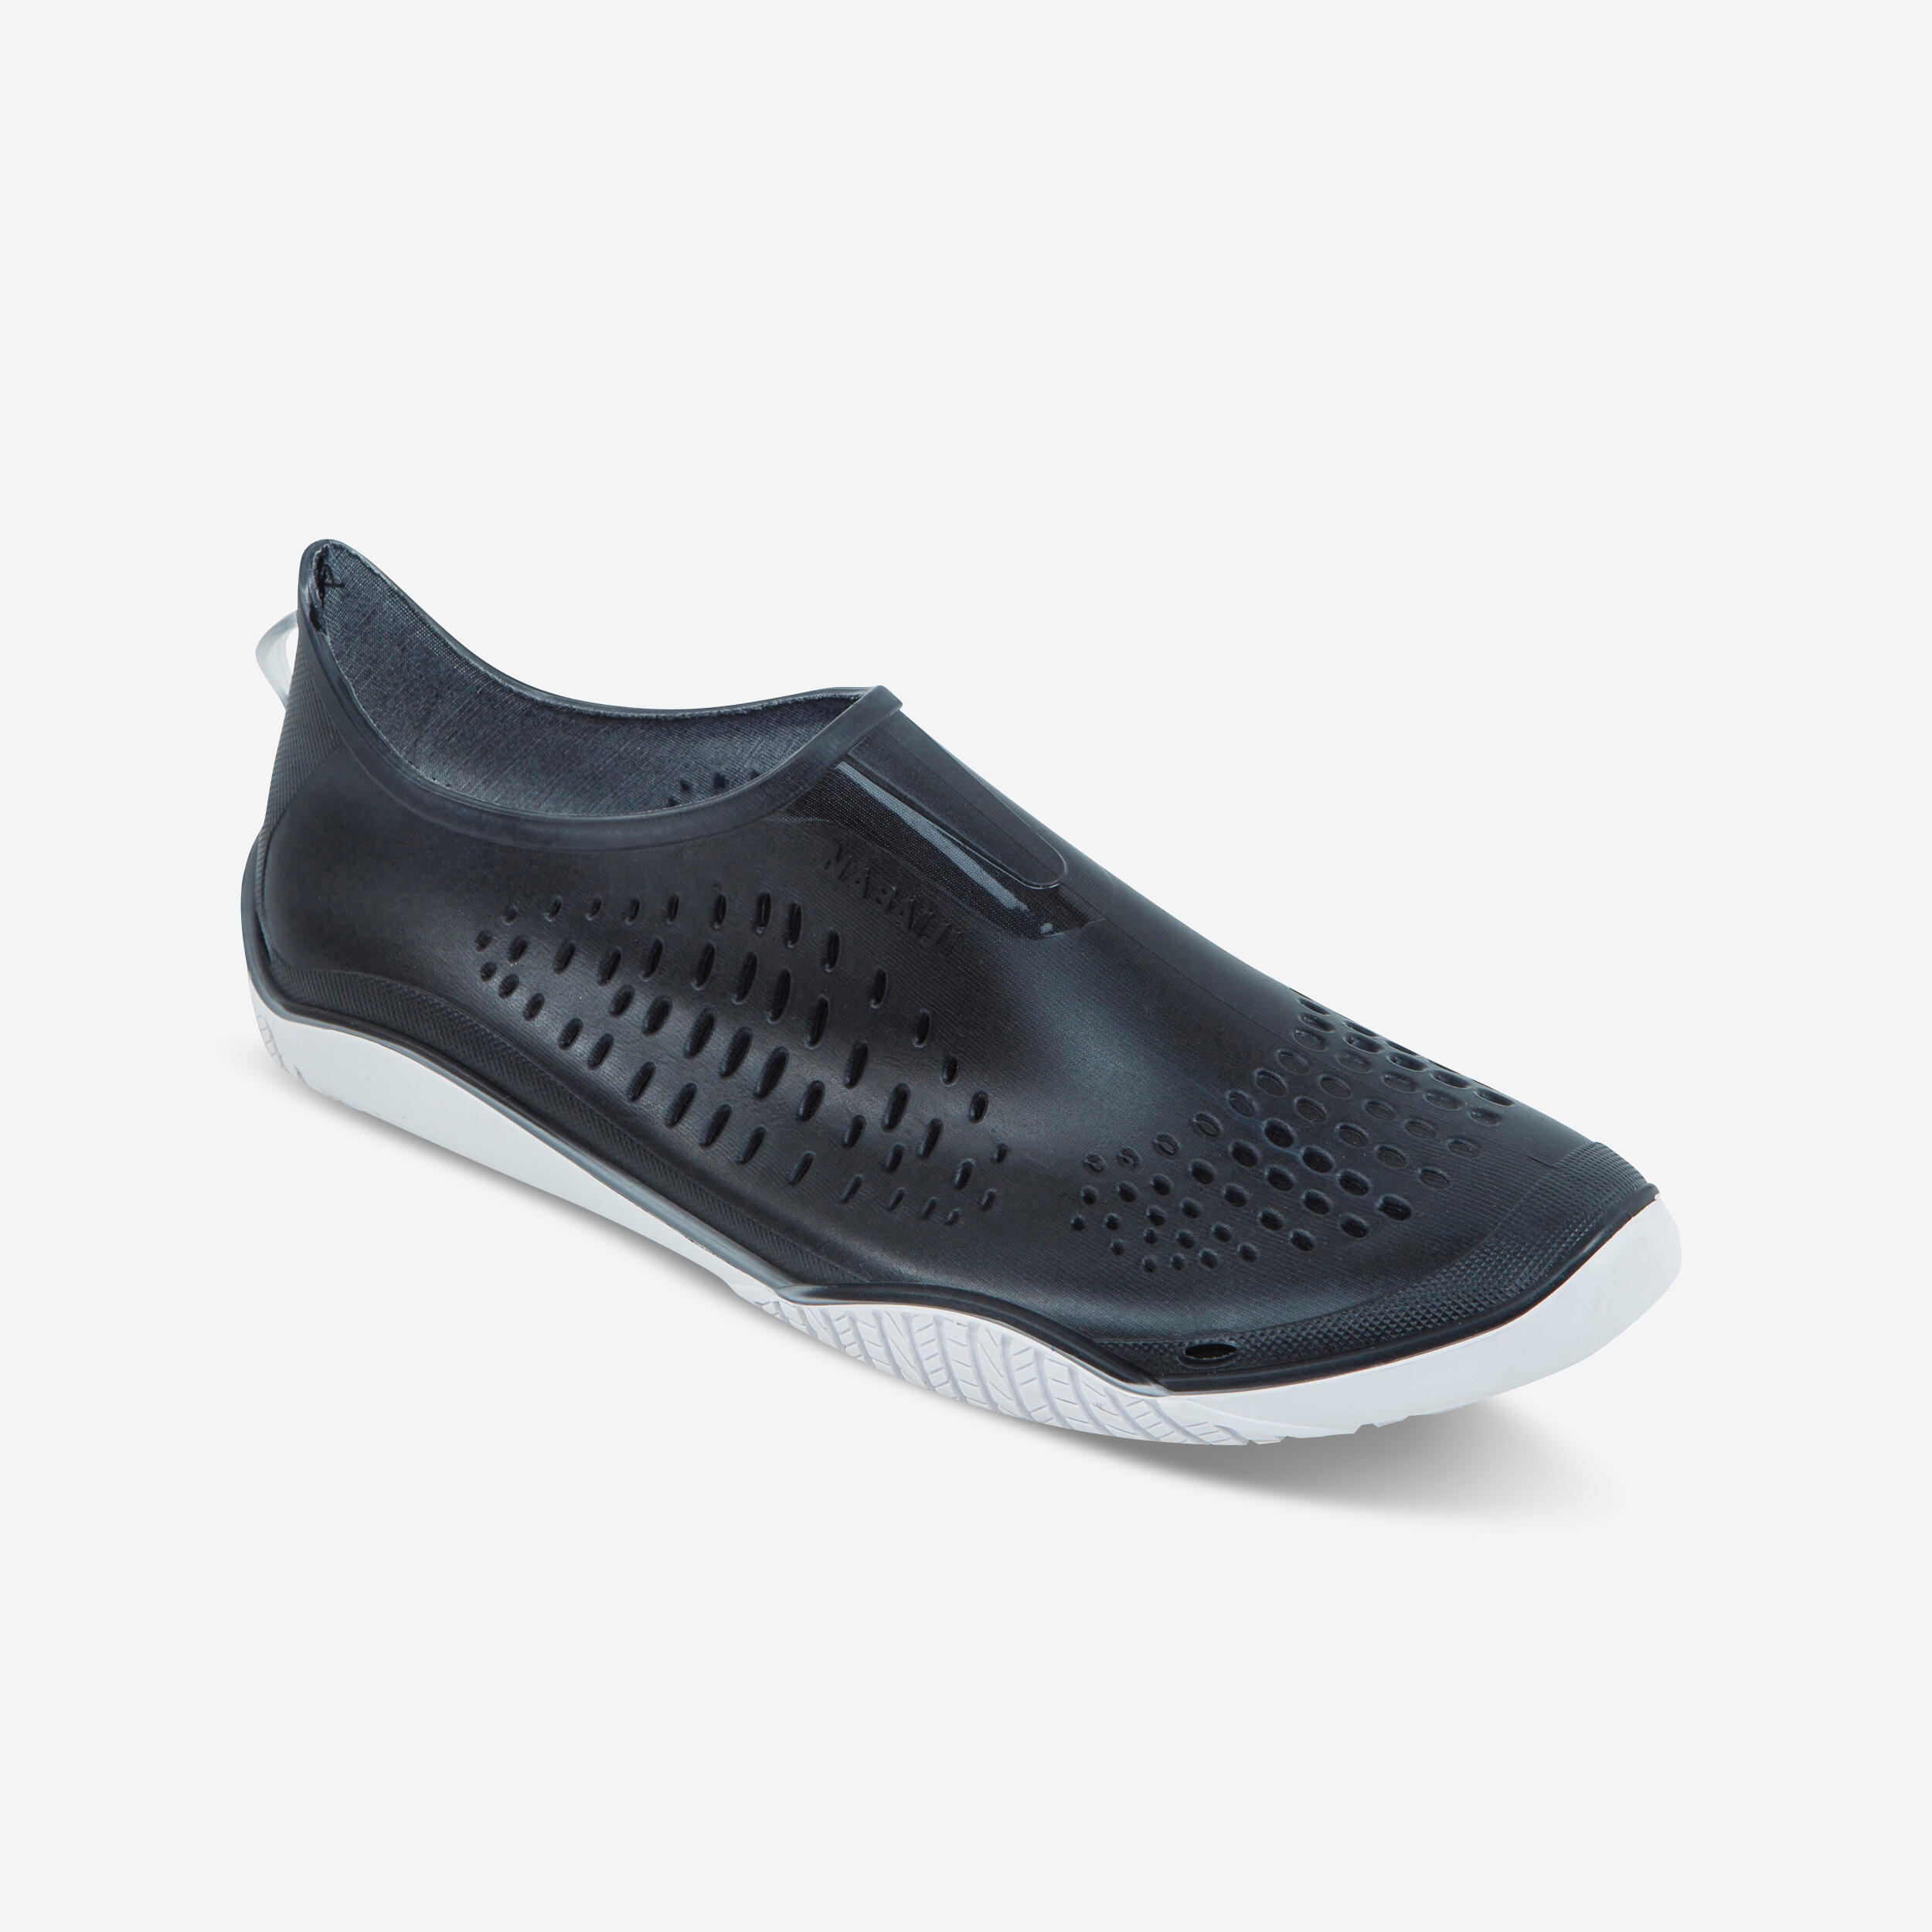 Aquabiking-Aquafit Water Shoes Fitshoe Black 4/7